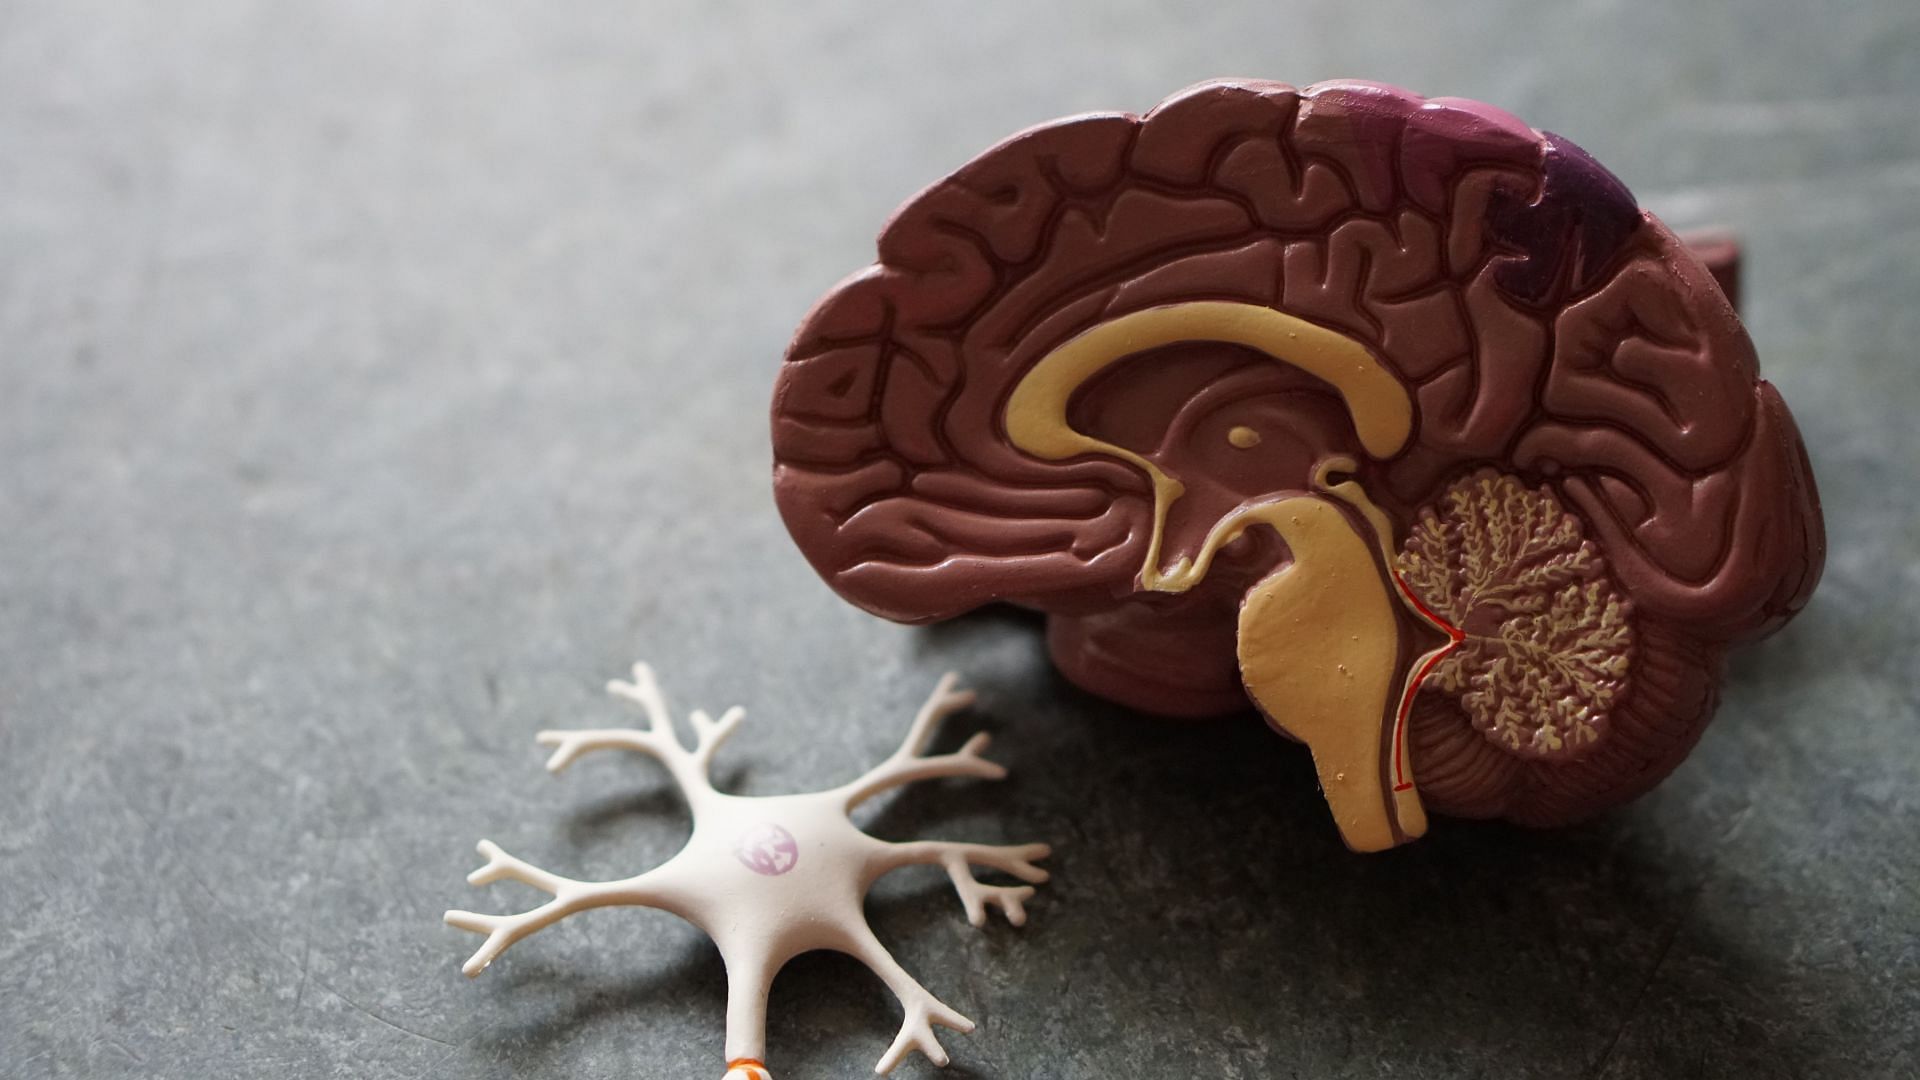 Kiwis are associated with improved brain health (Image via Unsplash/Robina Weermeijer)